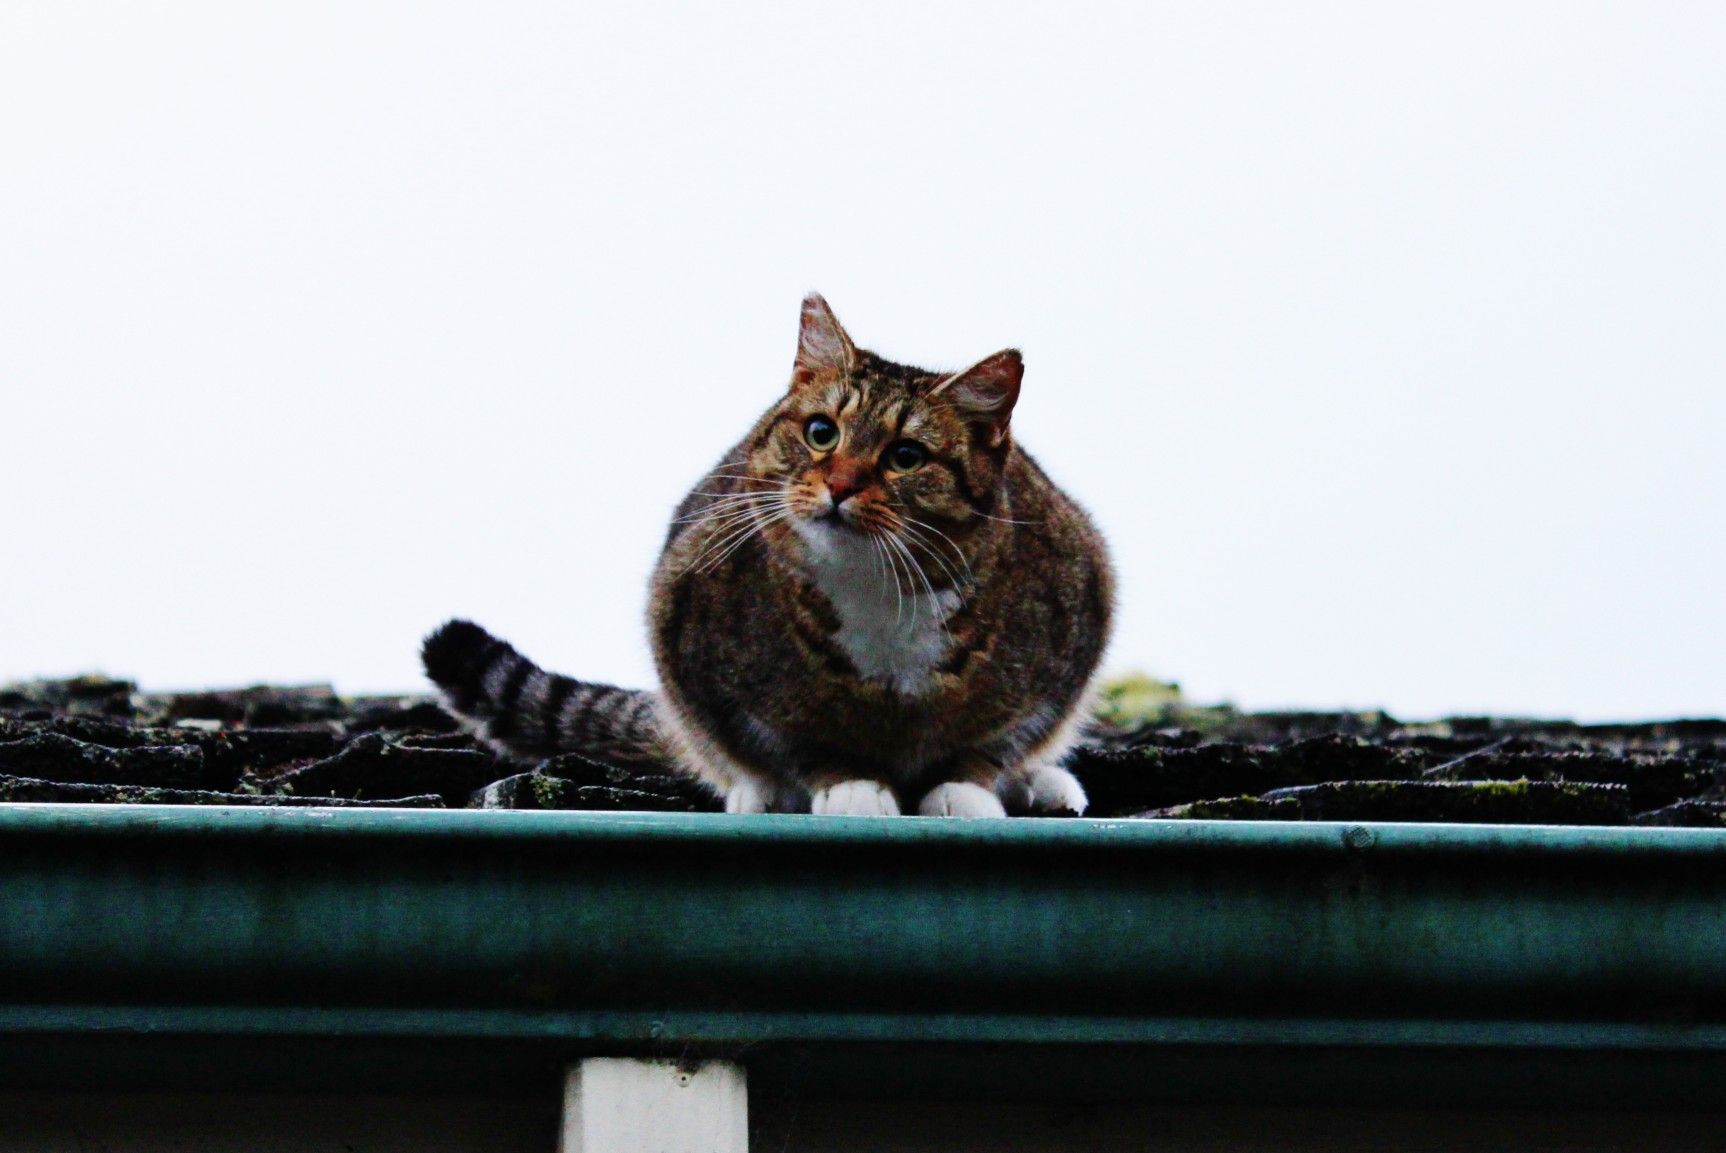 cat in gutter on roof